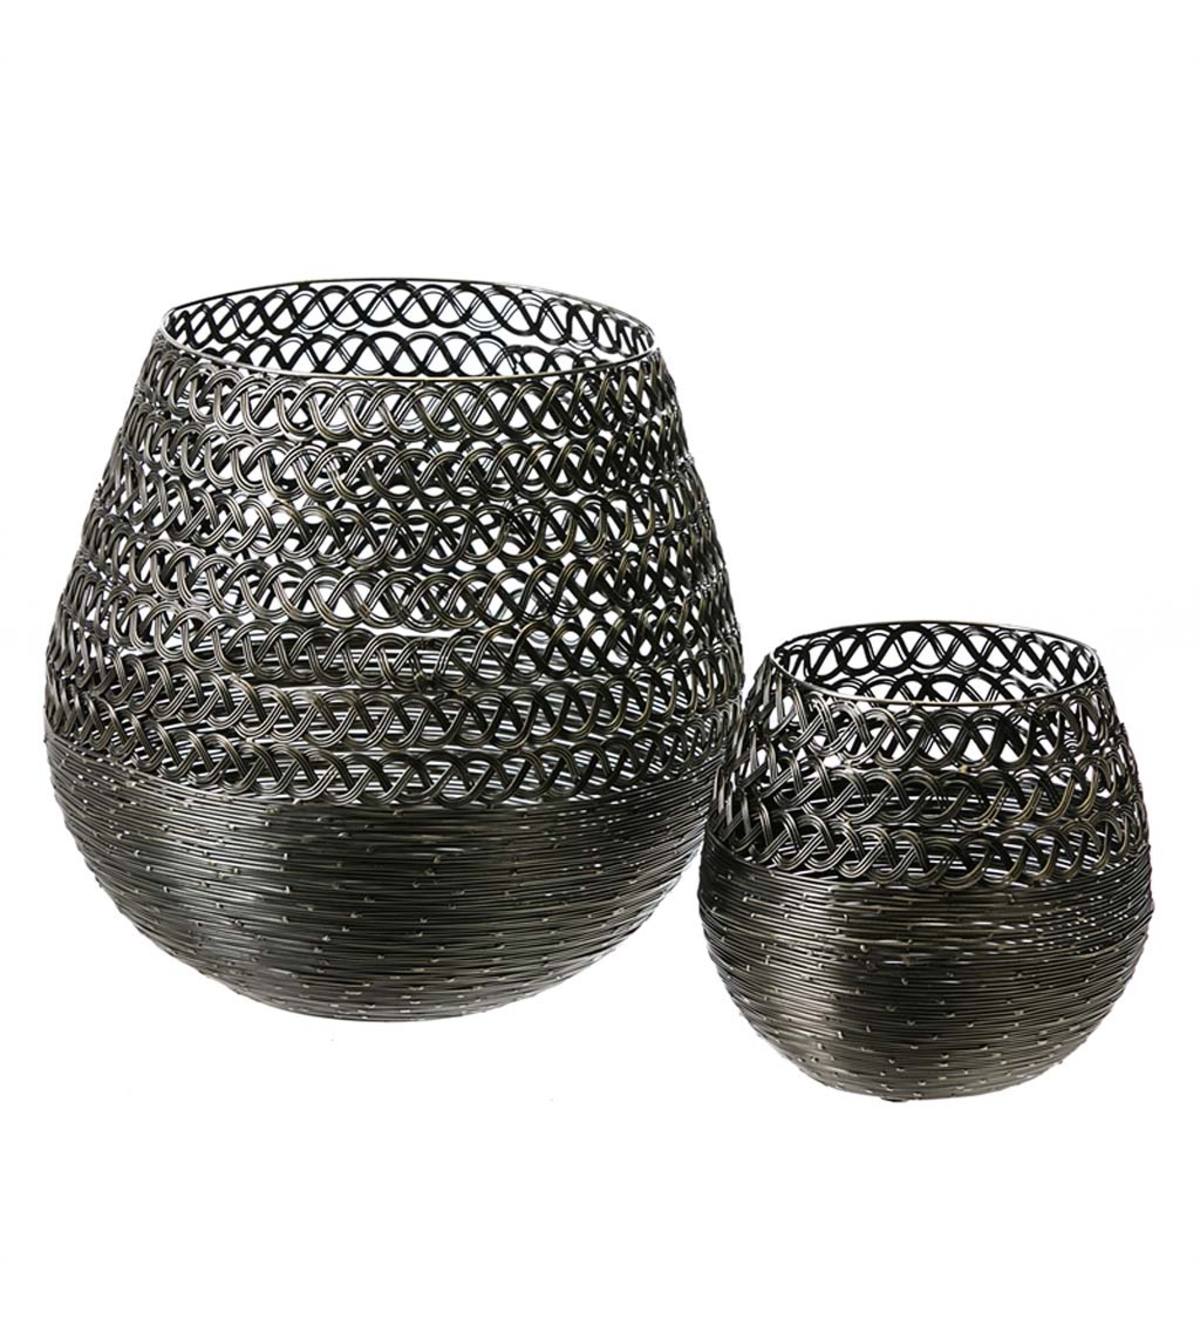 Metal Woven Baskets, Set of 2